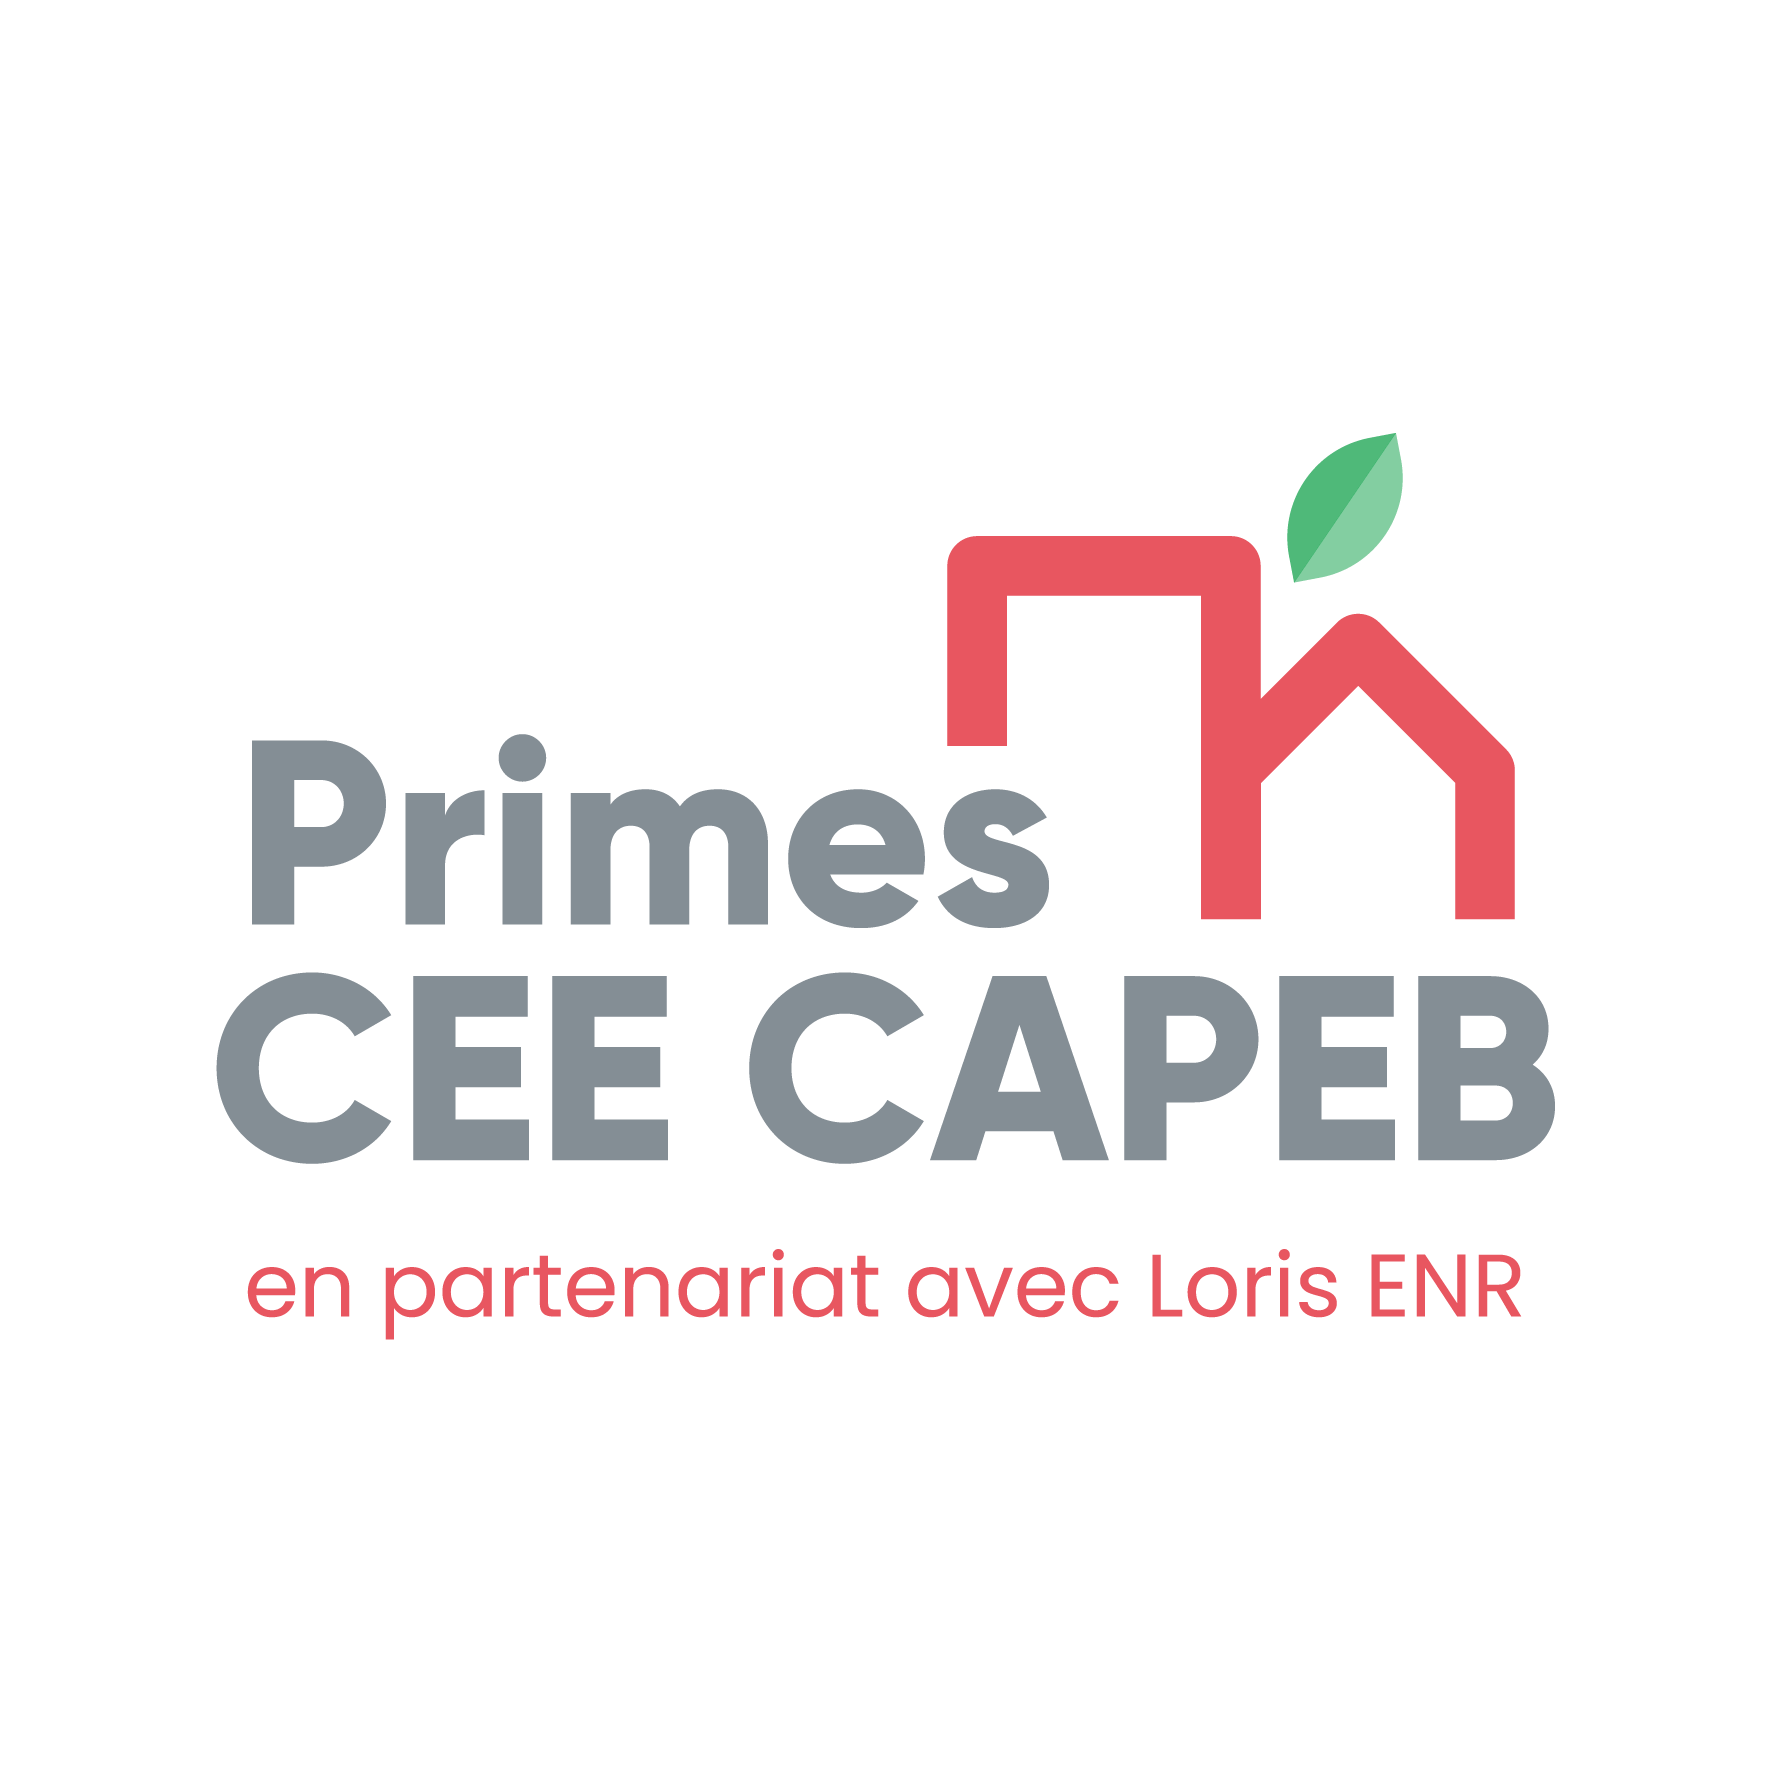 Prime CEE CAPEB_logo rvb